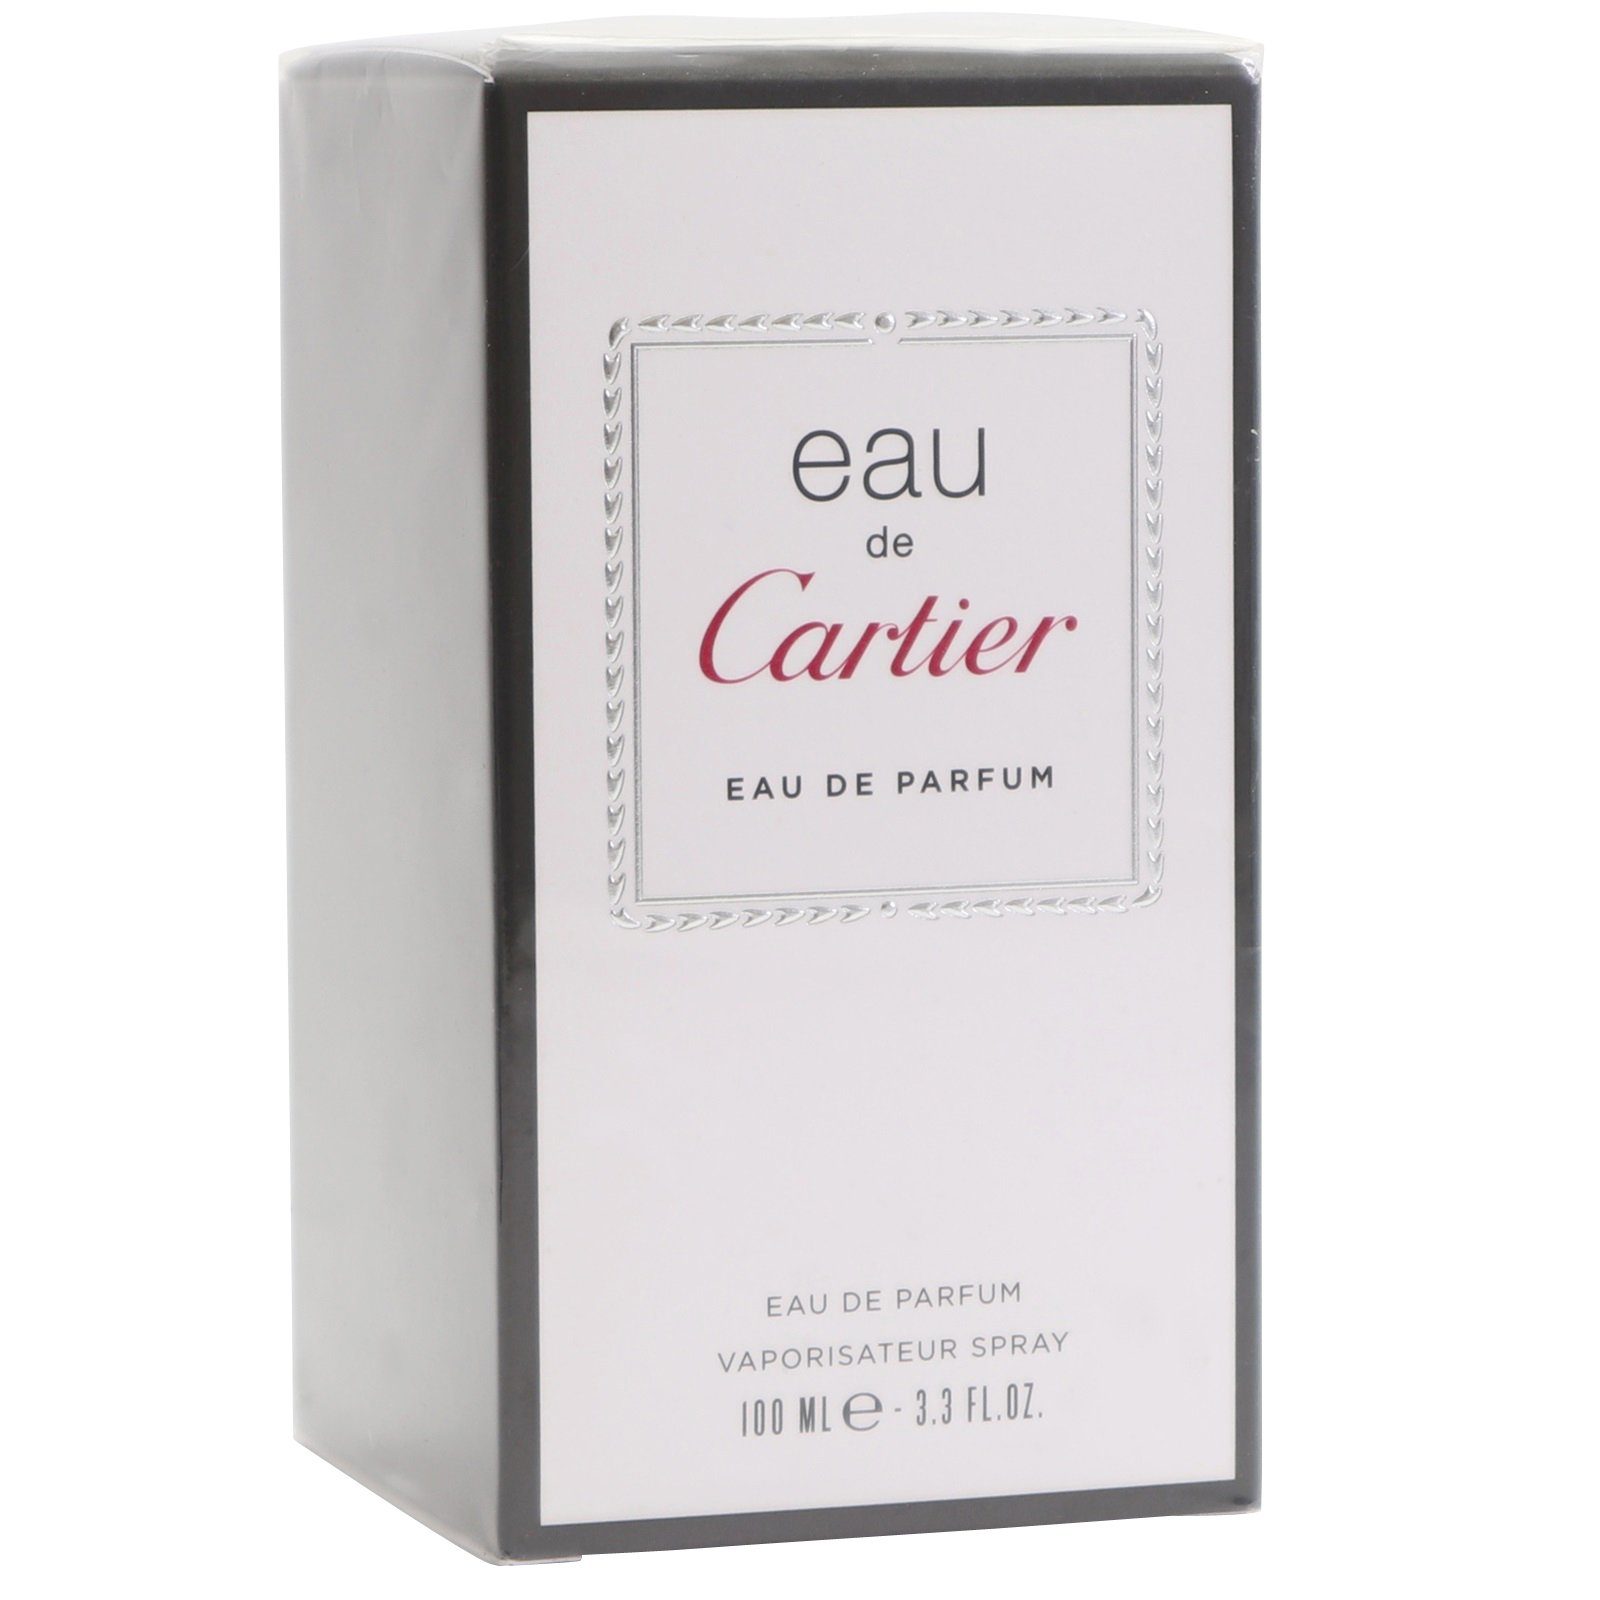 Cartier Eau de Parfum Eau de Cartier Eau de Parfum Spray 100 ml